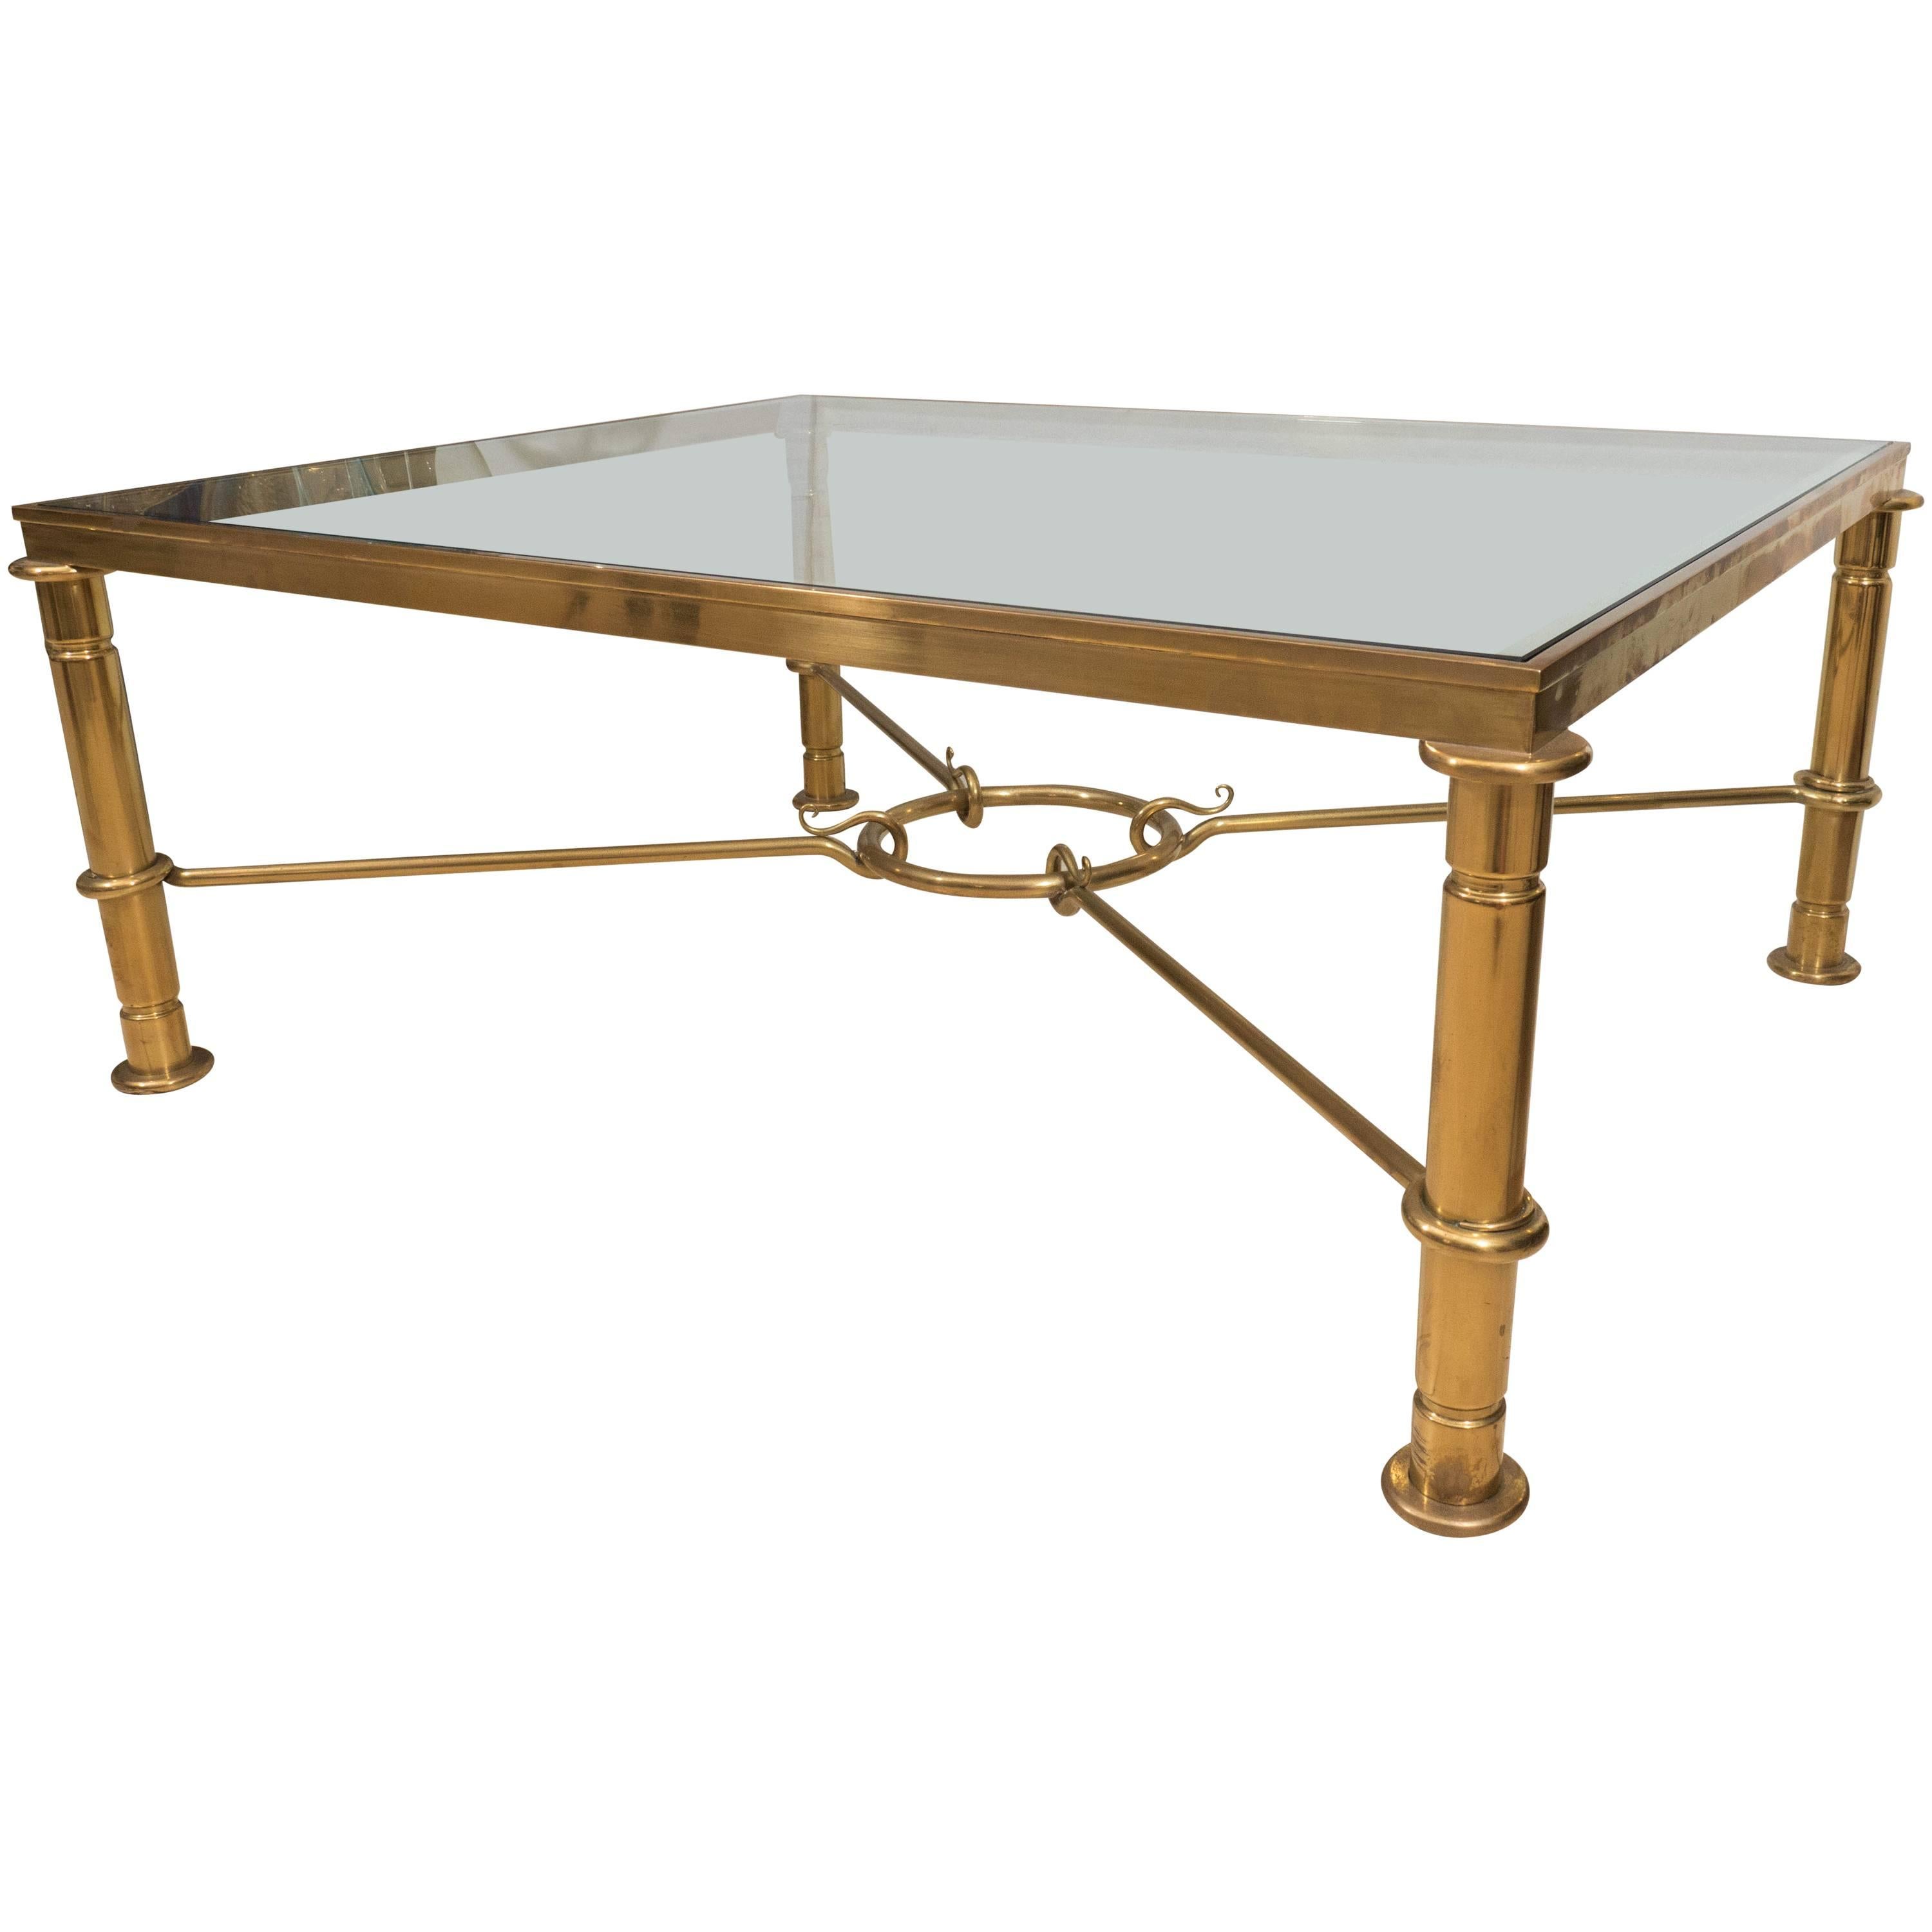 Brass coffee table with cross bar design